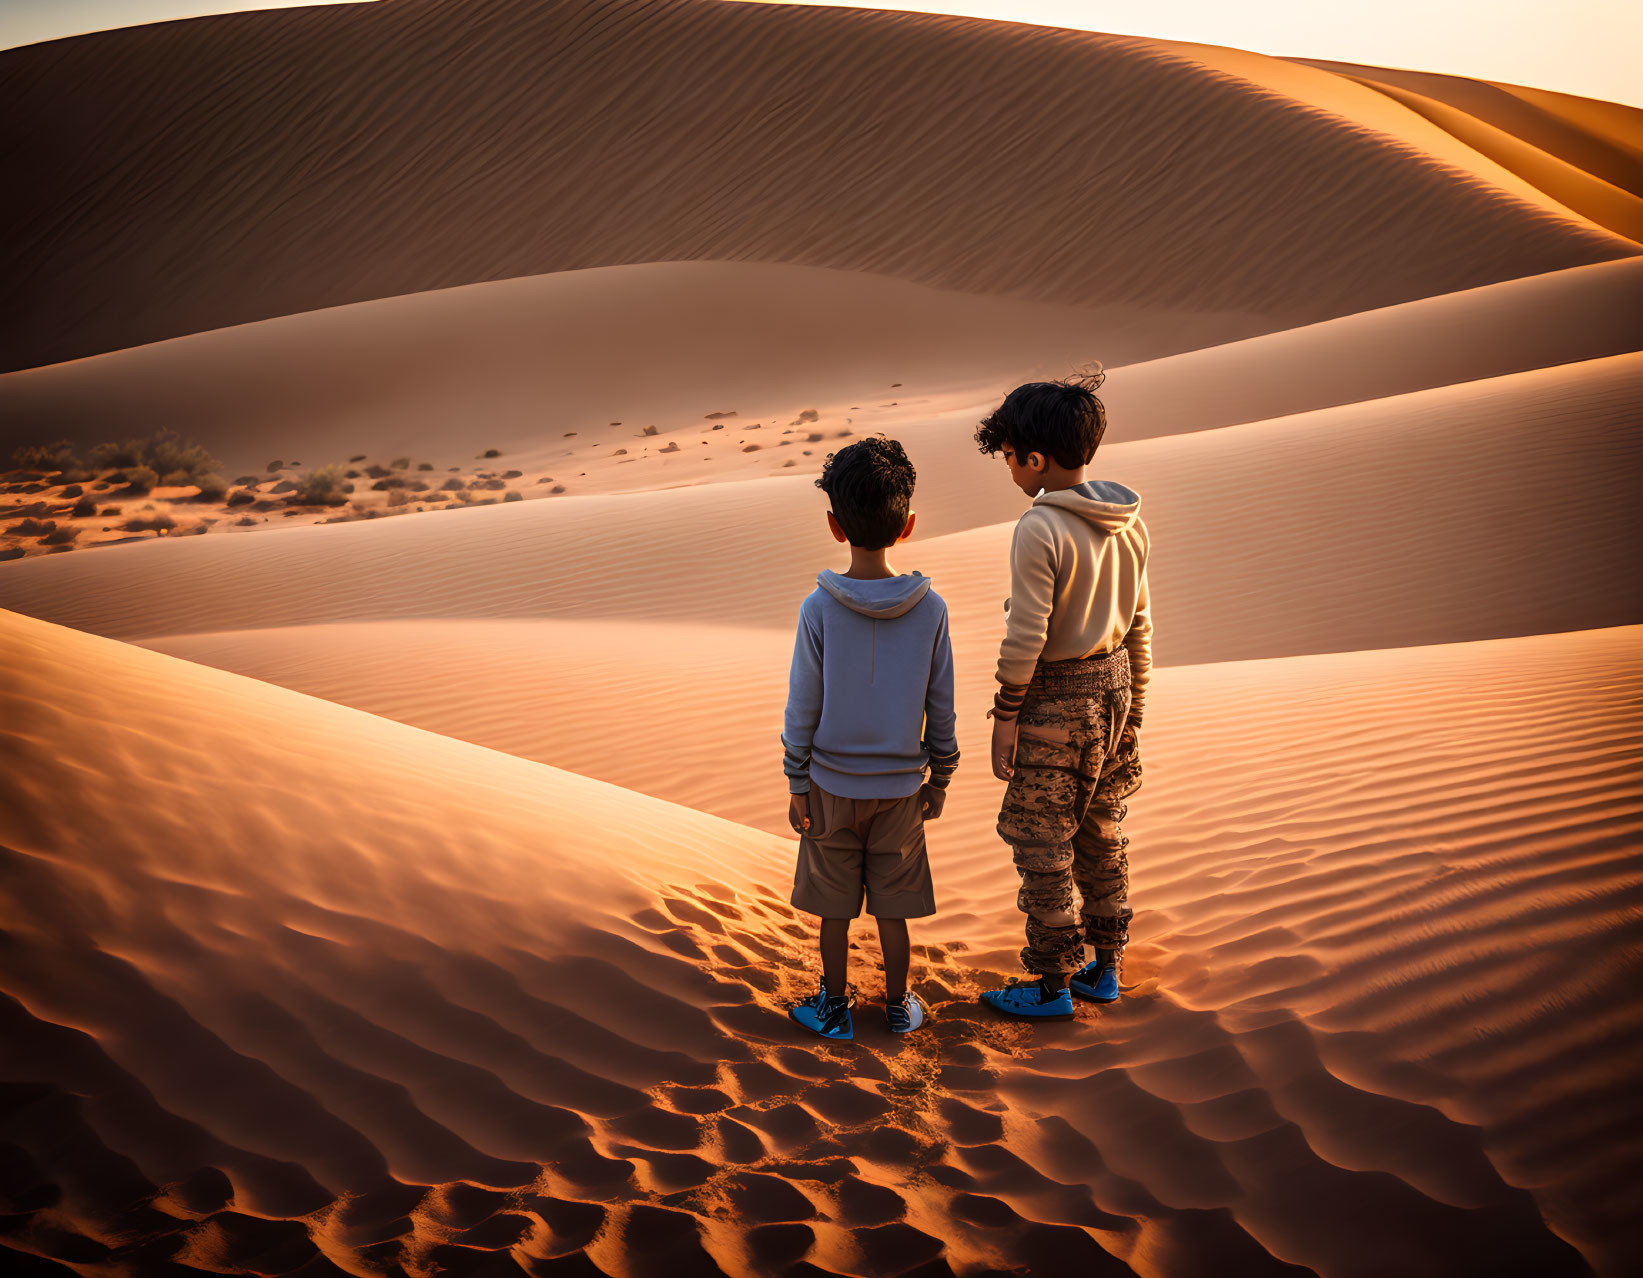 Children standing on desert sand dune at sunrise with elongated shadows.